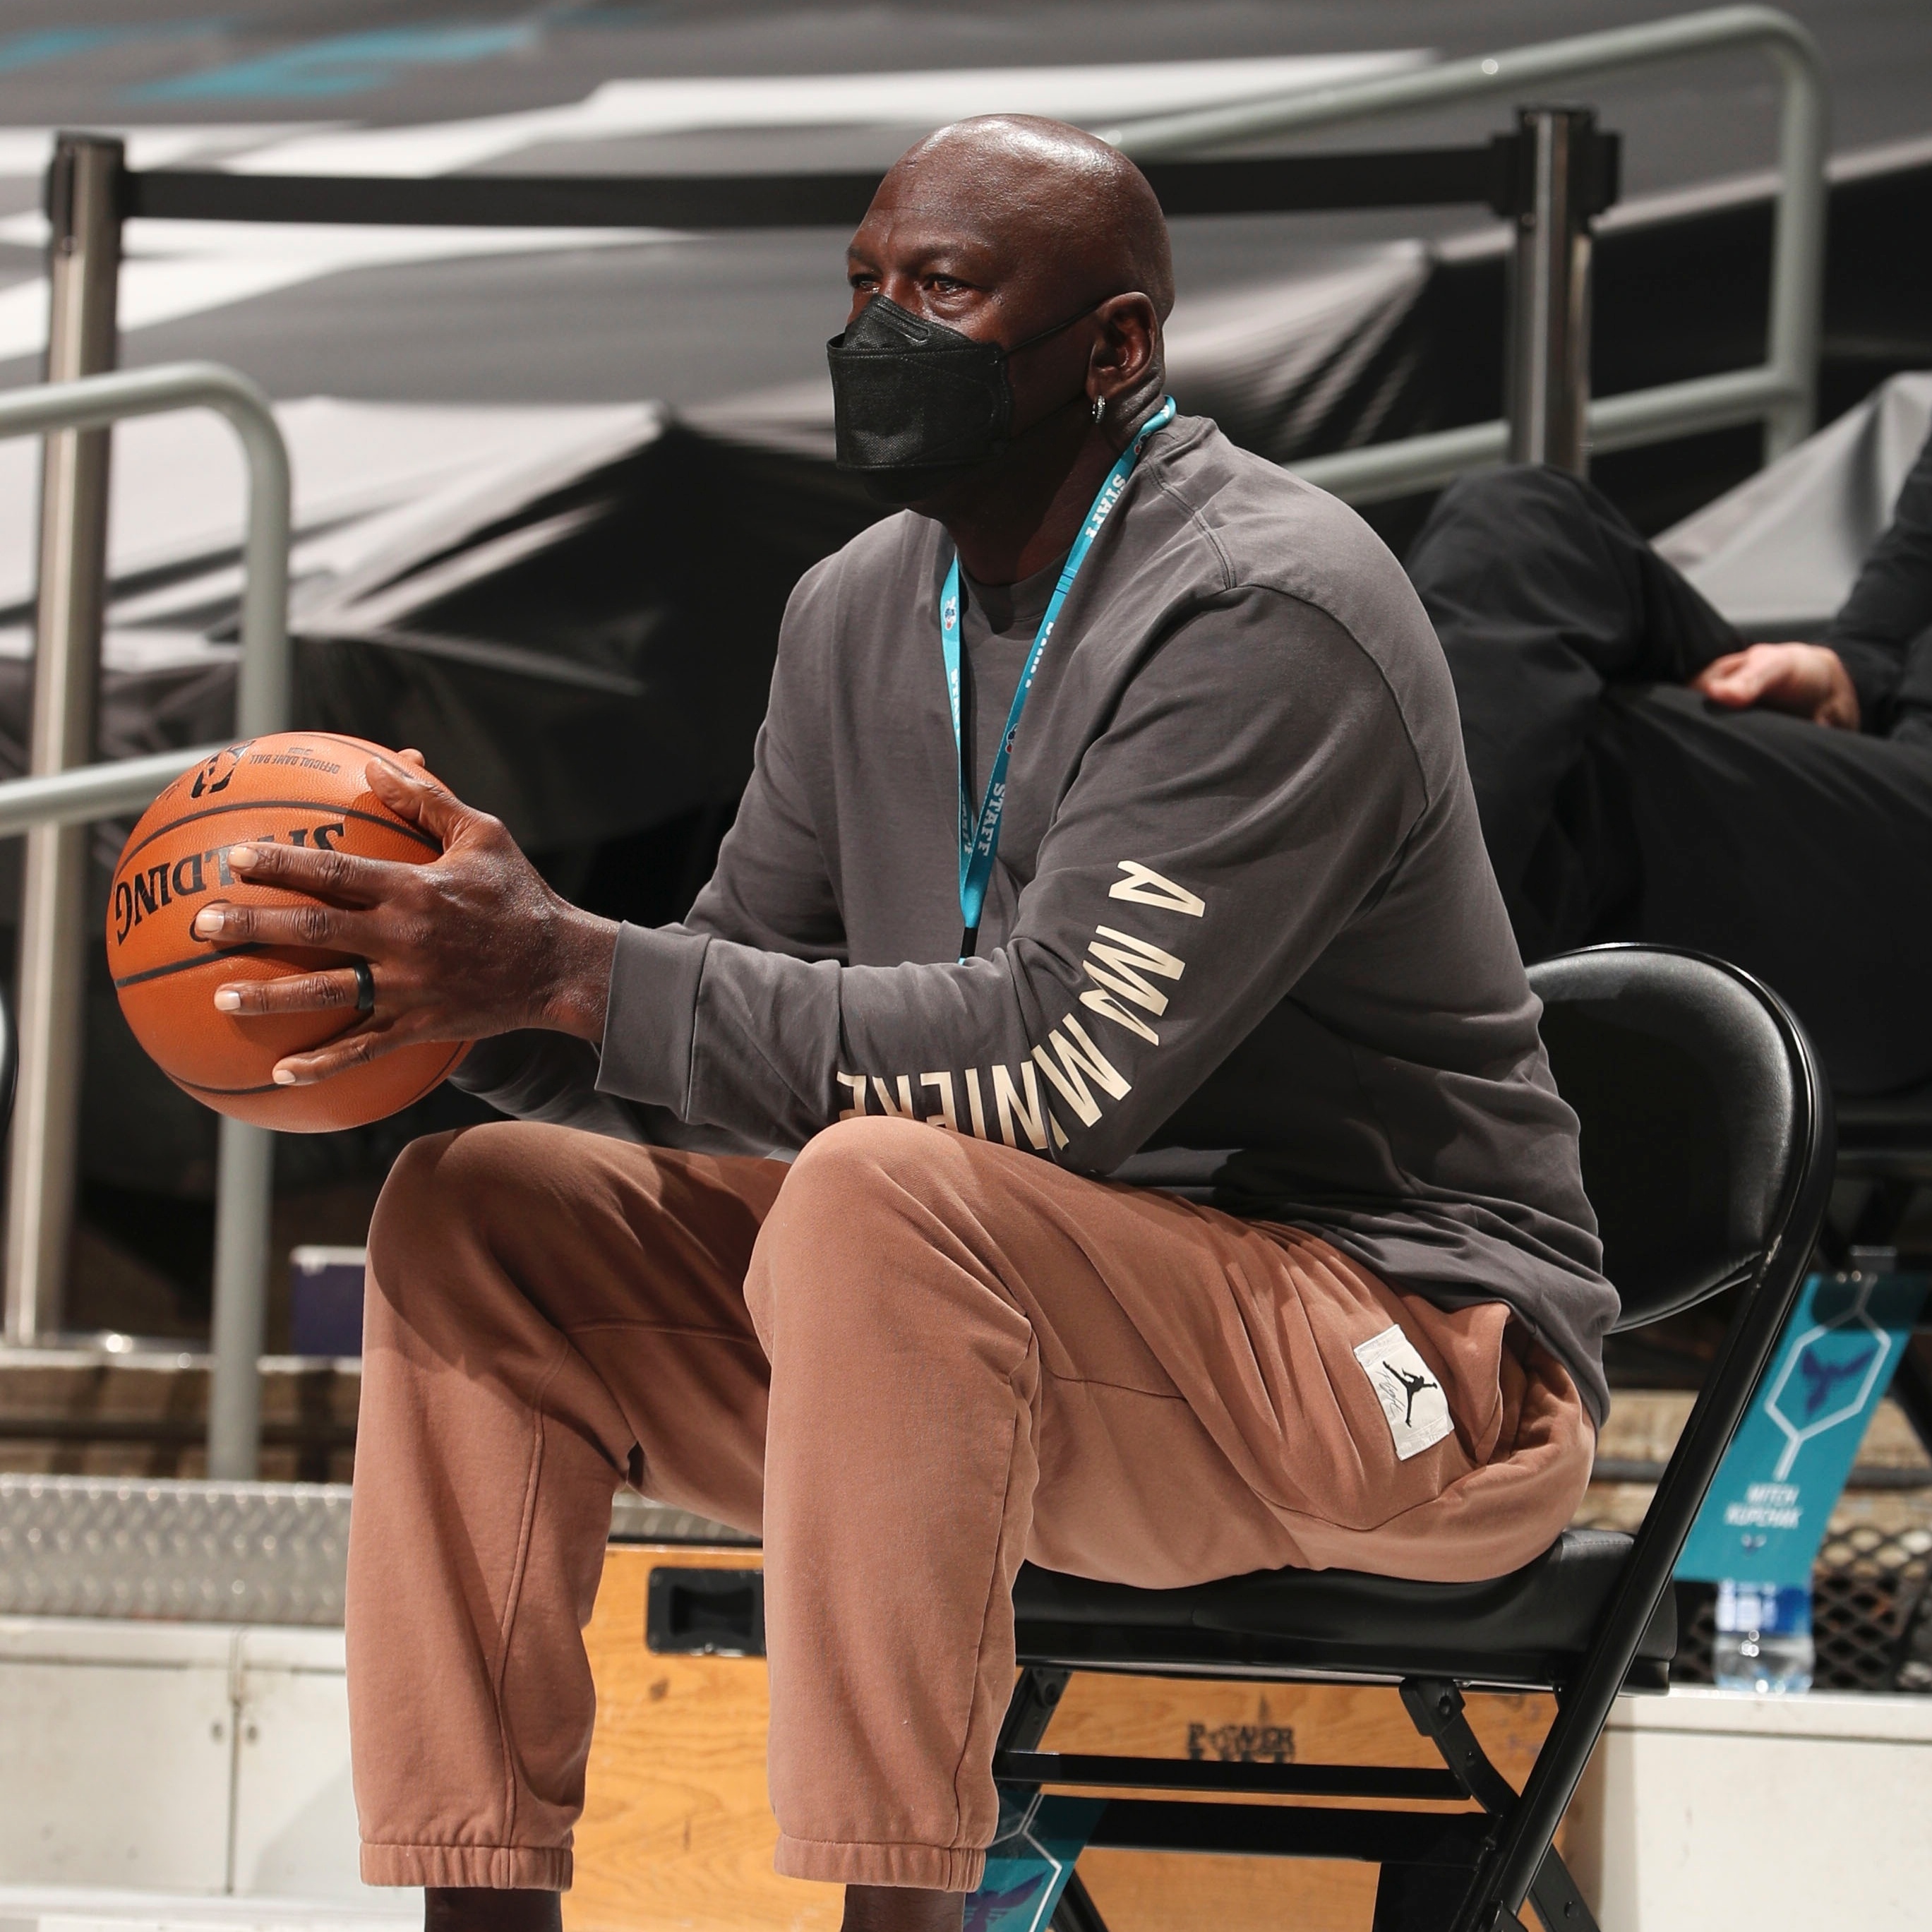 Jordan, maior jogador de basquete de todos os tempos, completa 52 anos.  veja vídeo